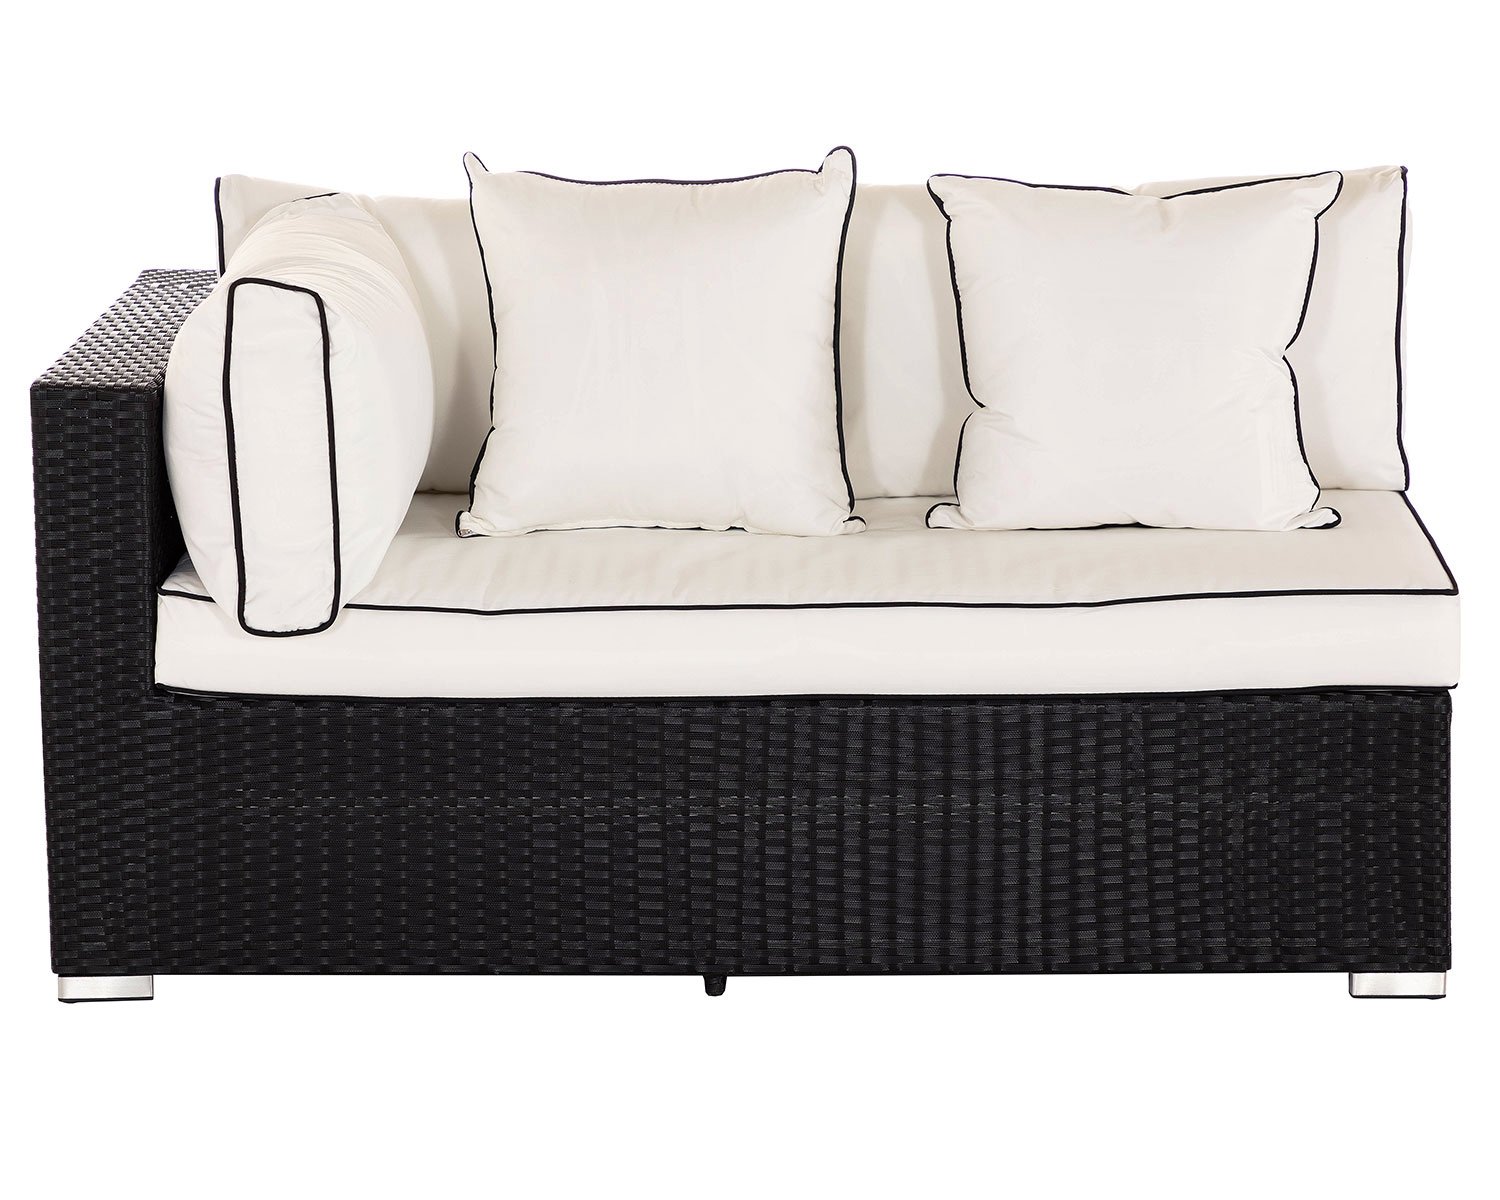 Rectangular Right As You Sit Rattan Garden Sofa in Black & White - Monaco - Rattan Direct